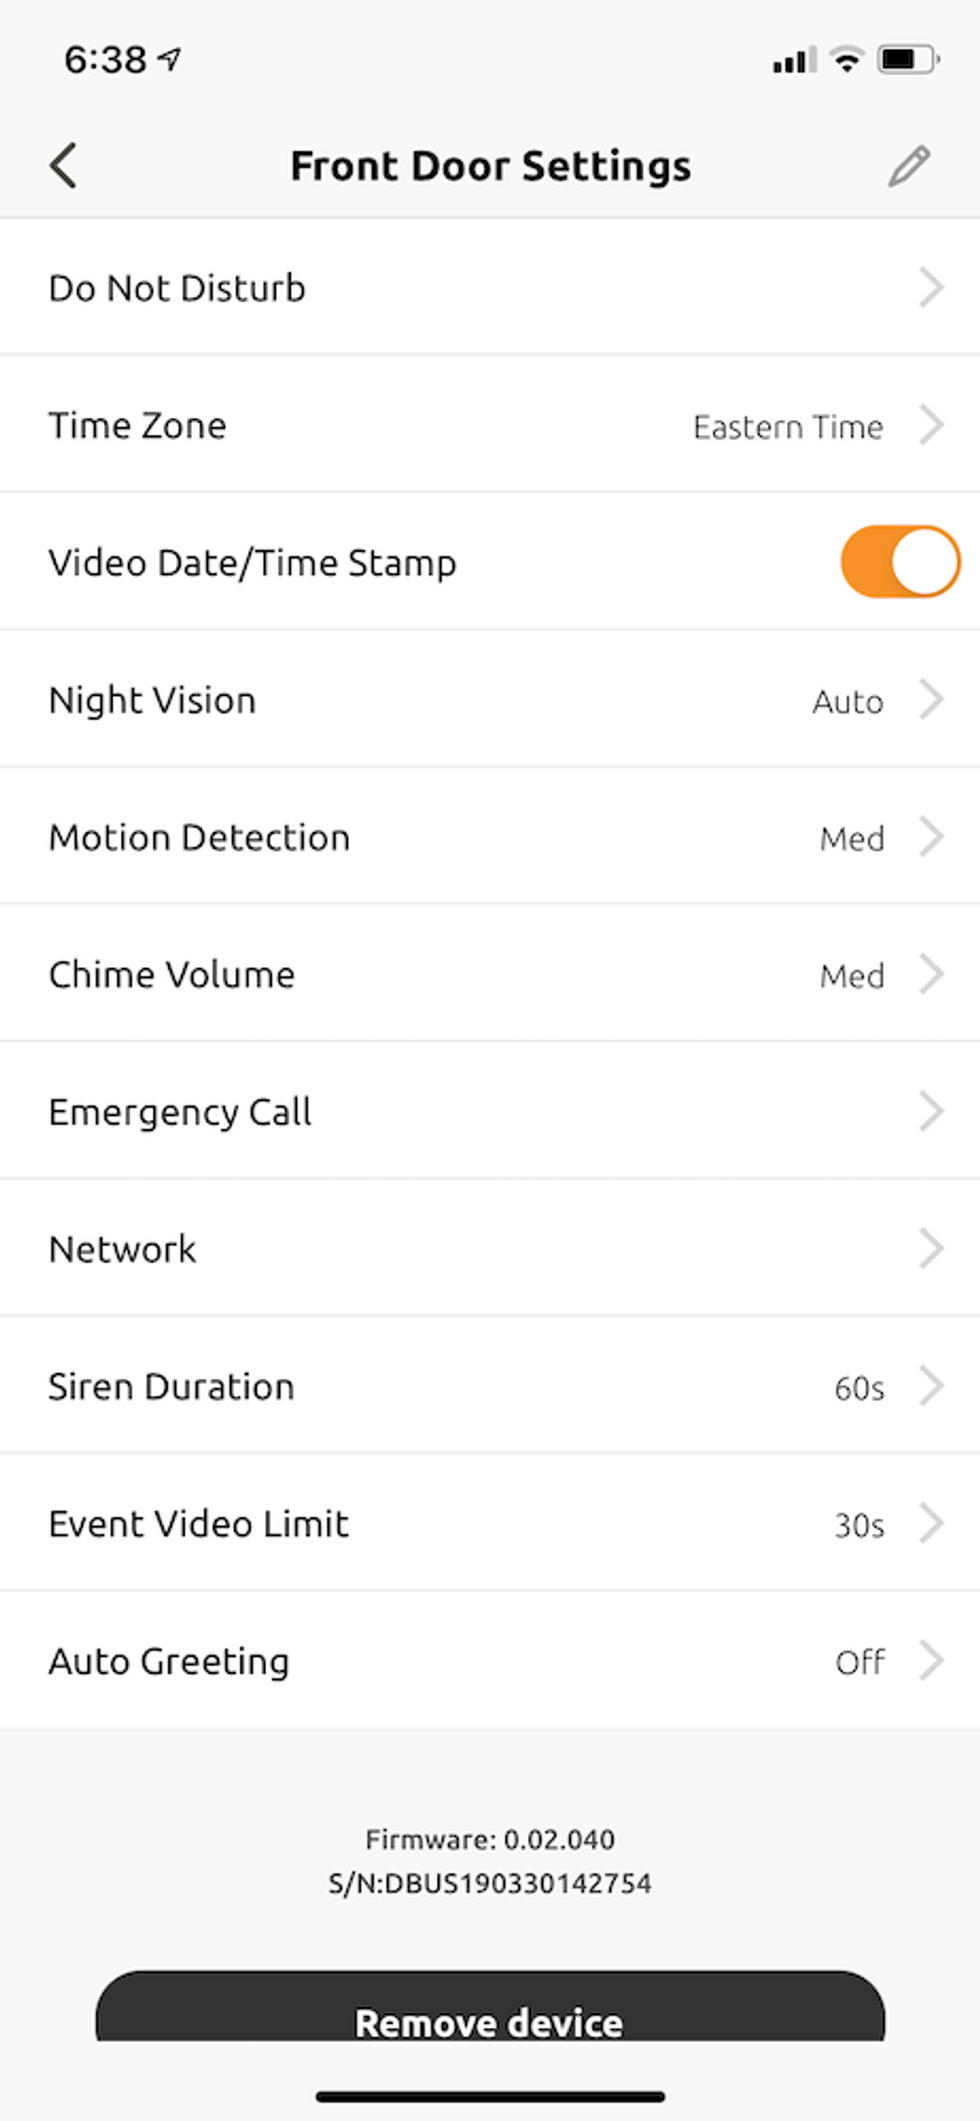 screenshot of video settings for Toucan video doorbell in app.